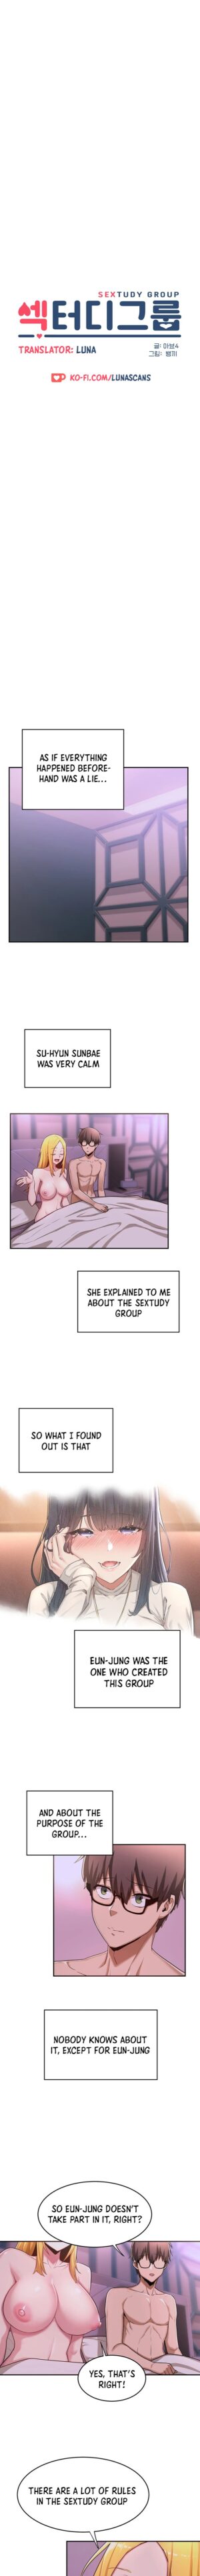 Sextudy Group